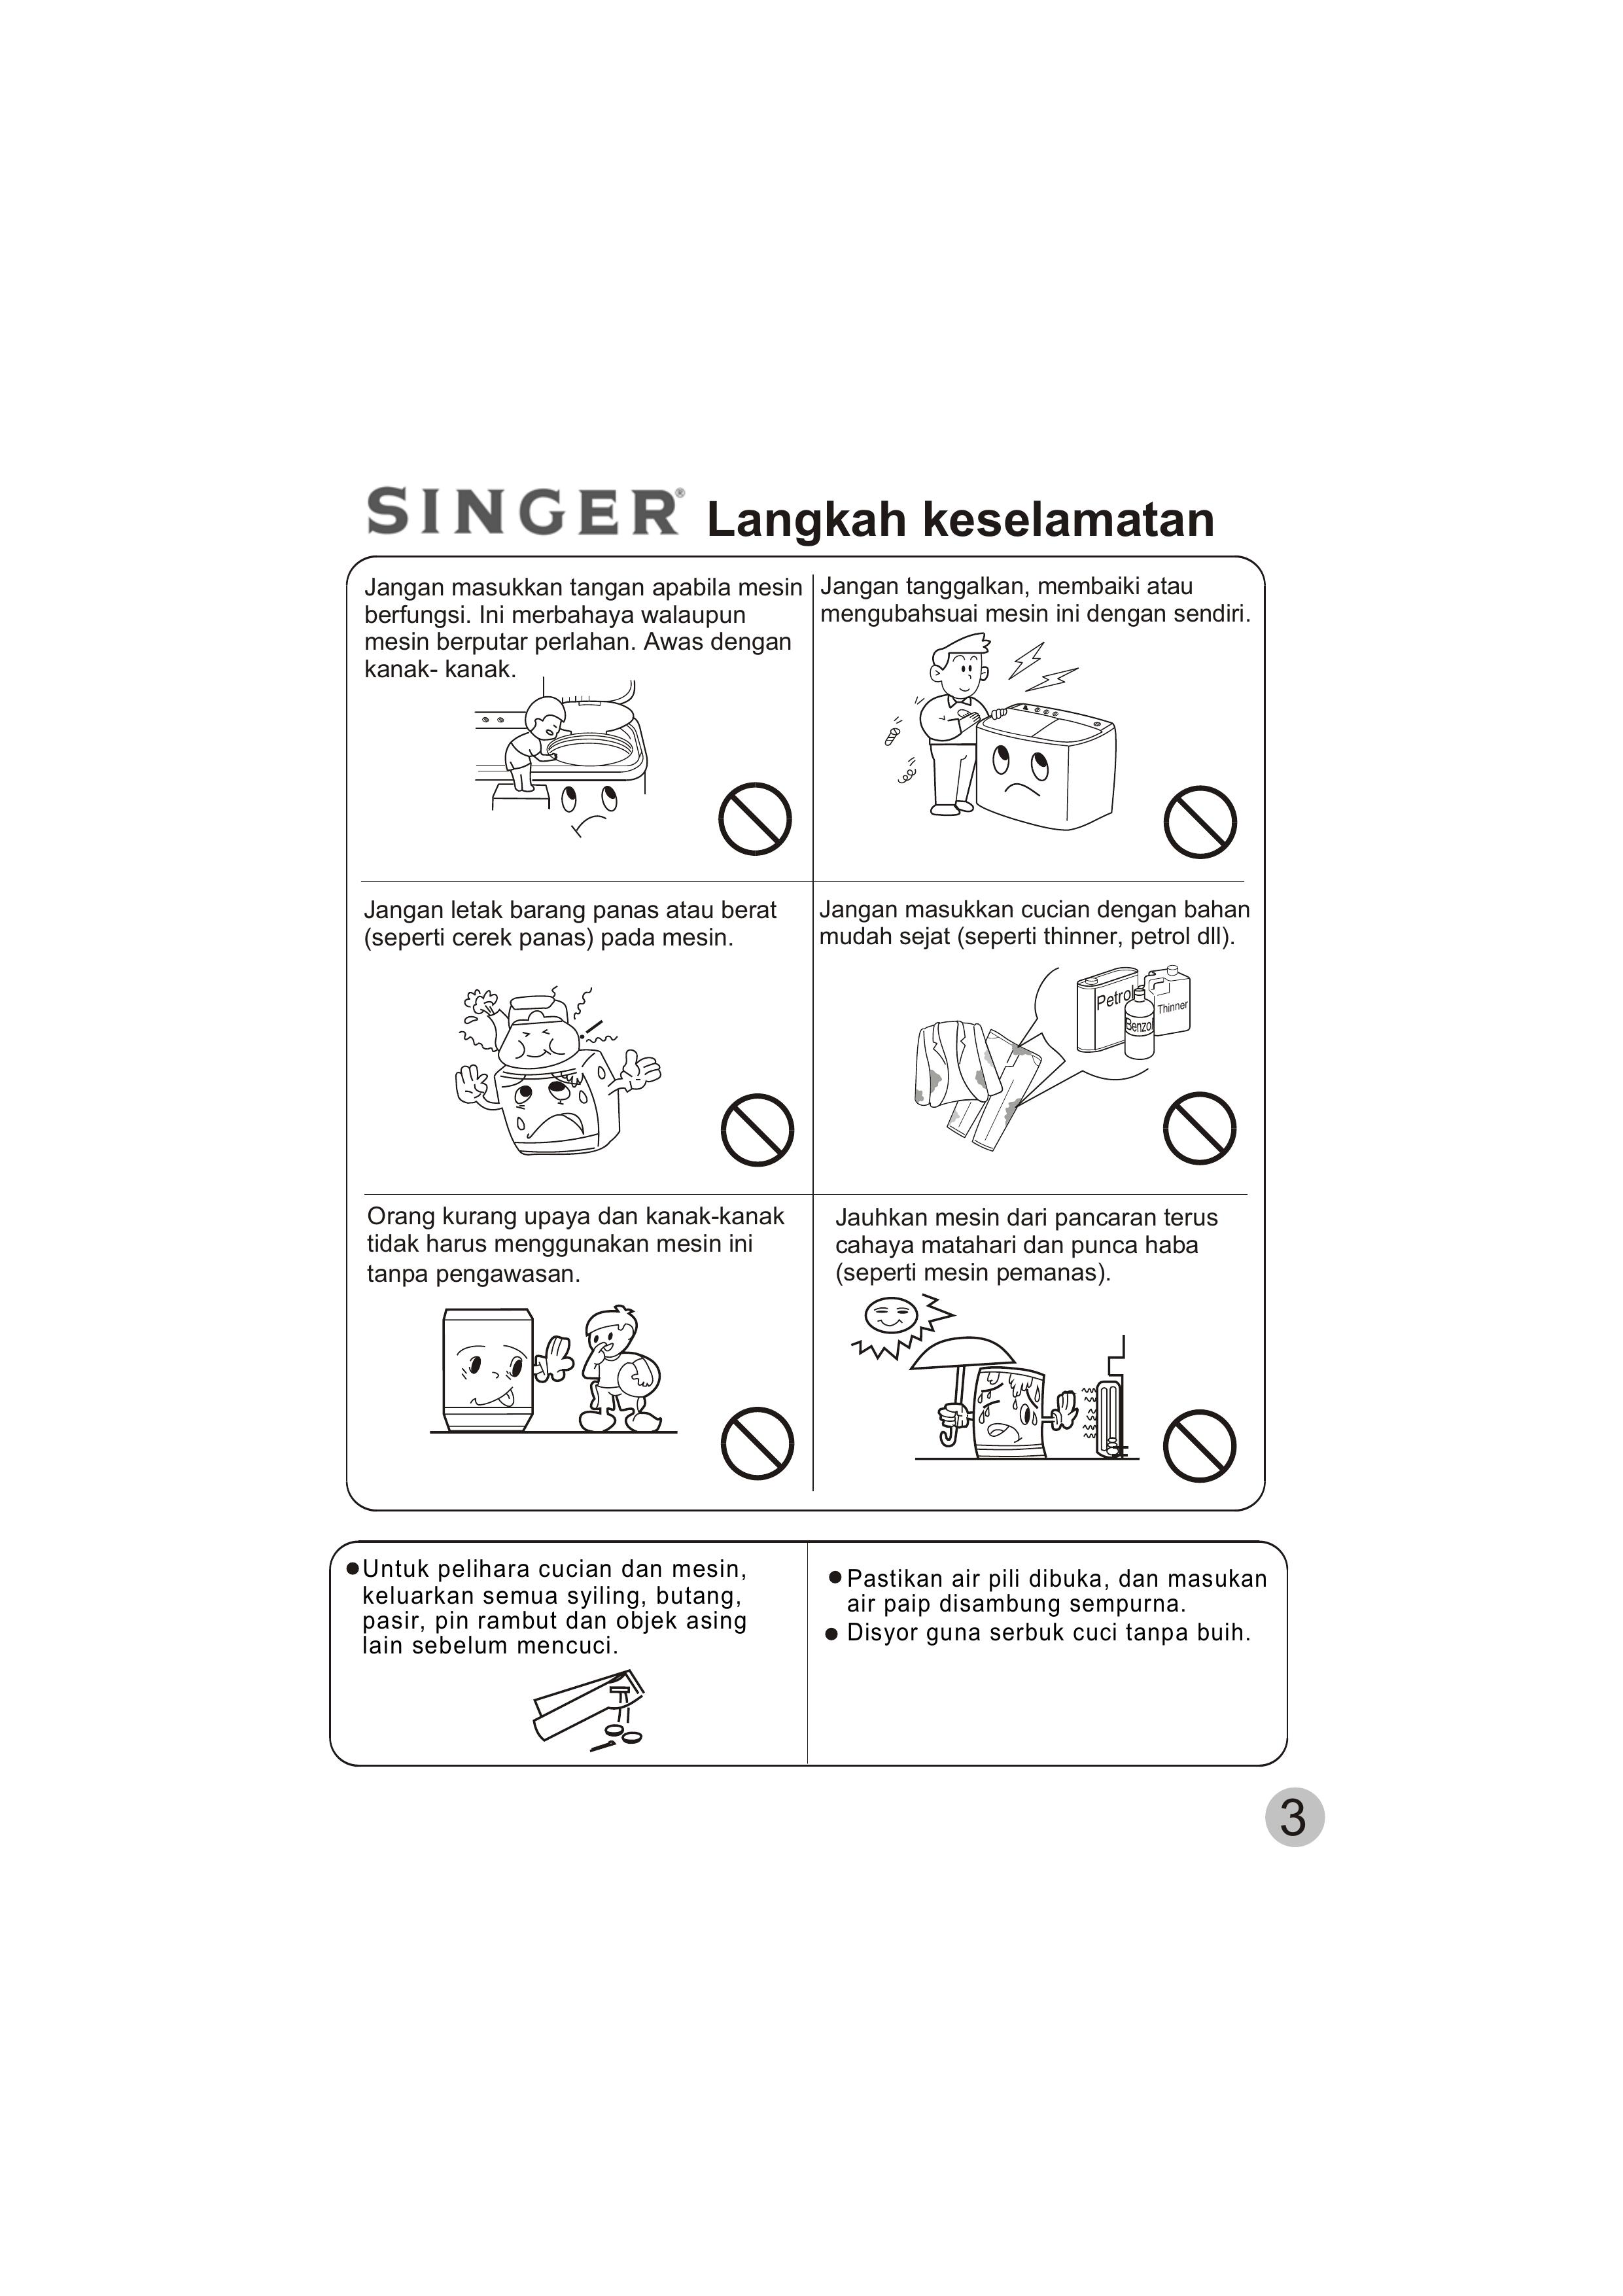 Singer WT5113 Washer/Dryer User Manual (Page 21)